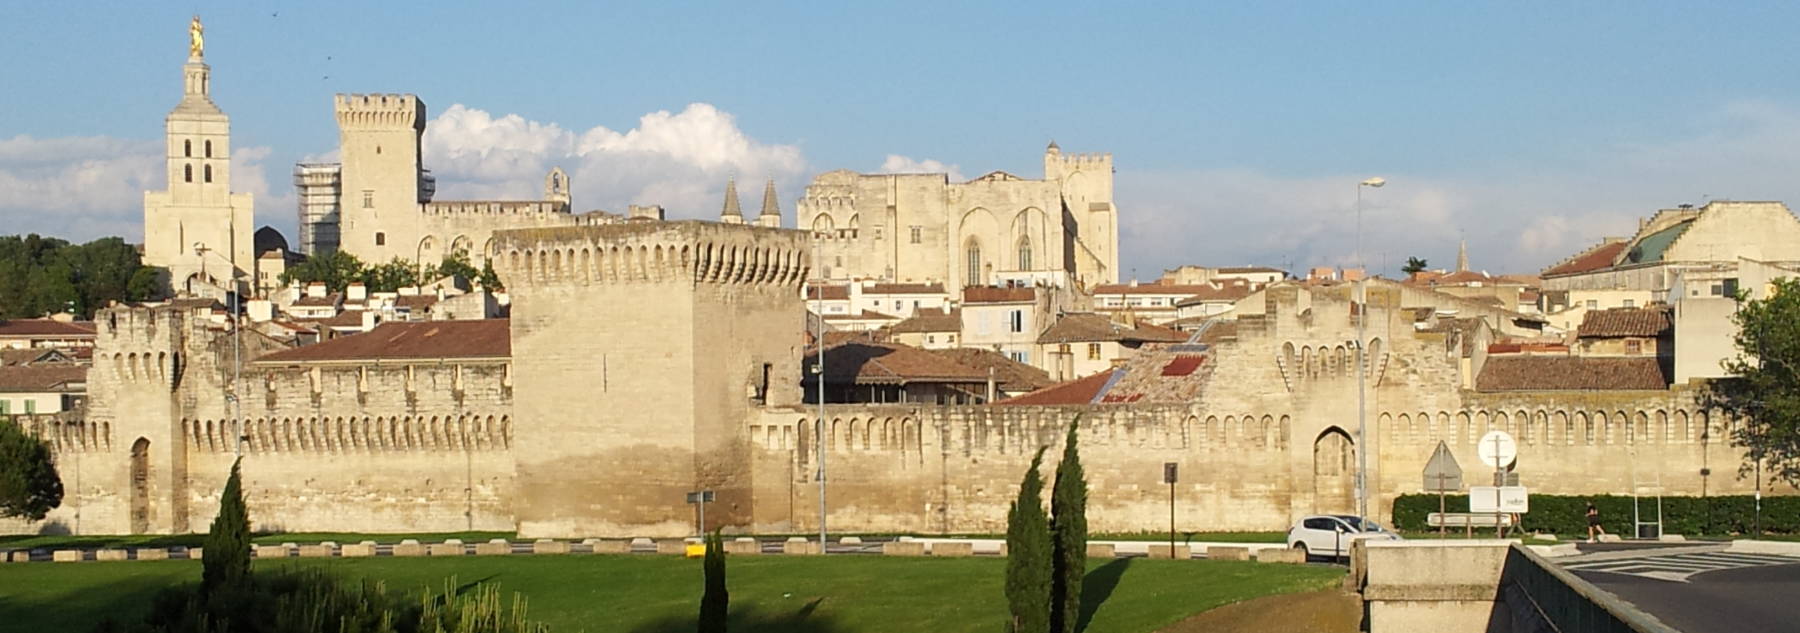 Palais des Papes and the medieval city walls at Avignon.